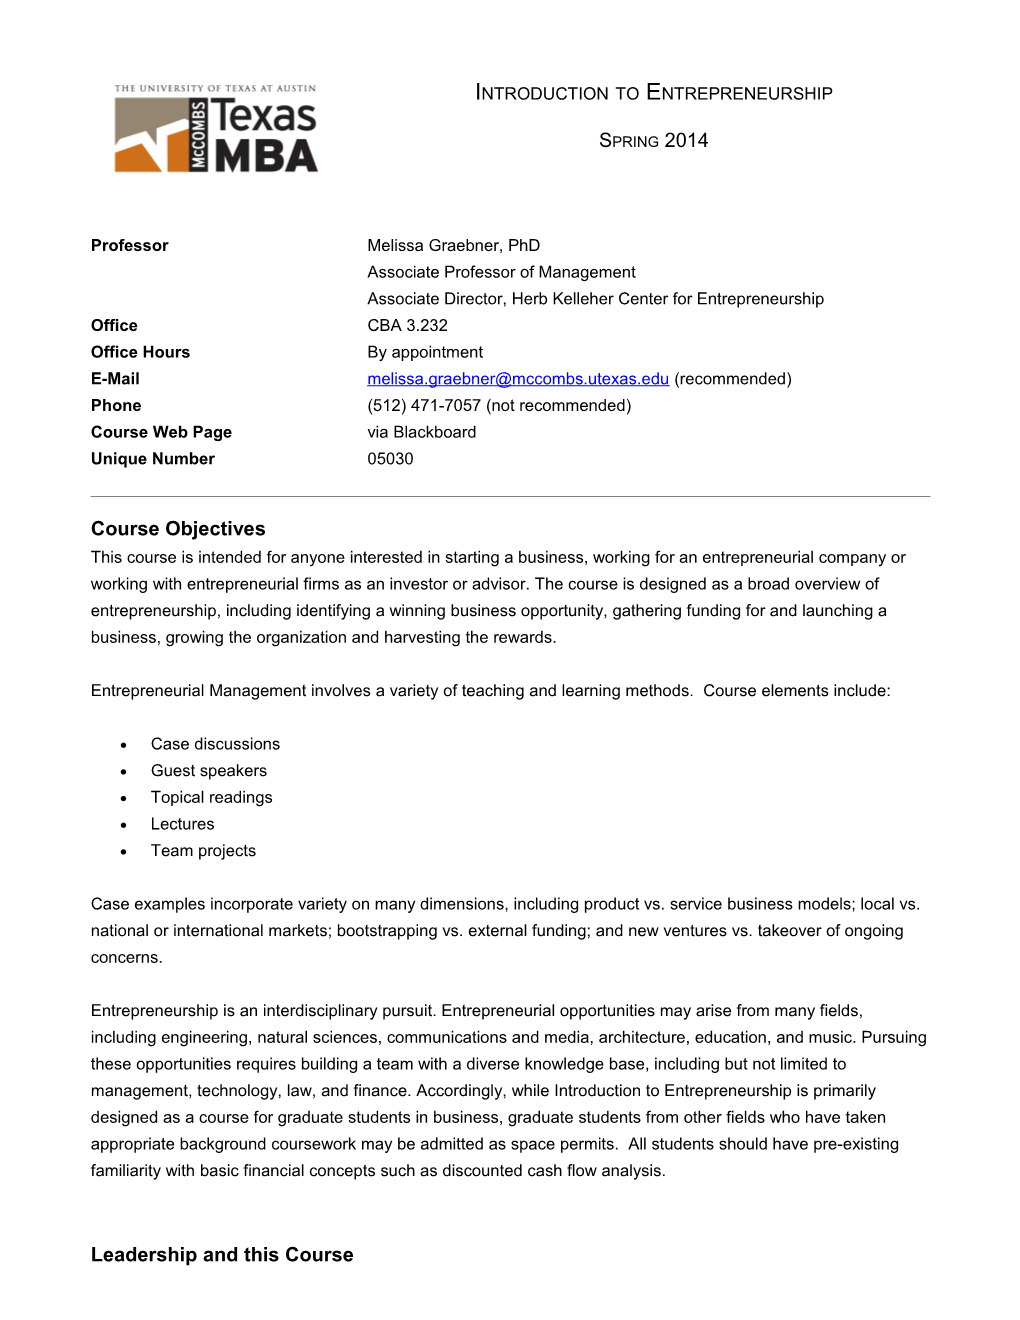 MBA 385 - Introduction to Entrepreneurship - Graebner - 05030